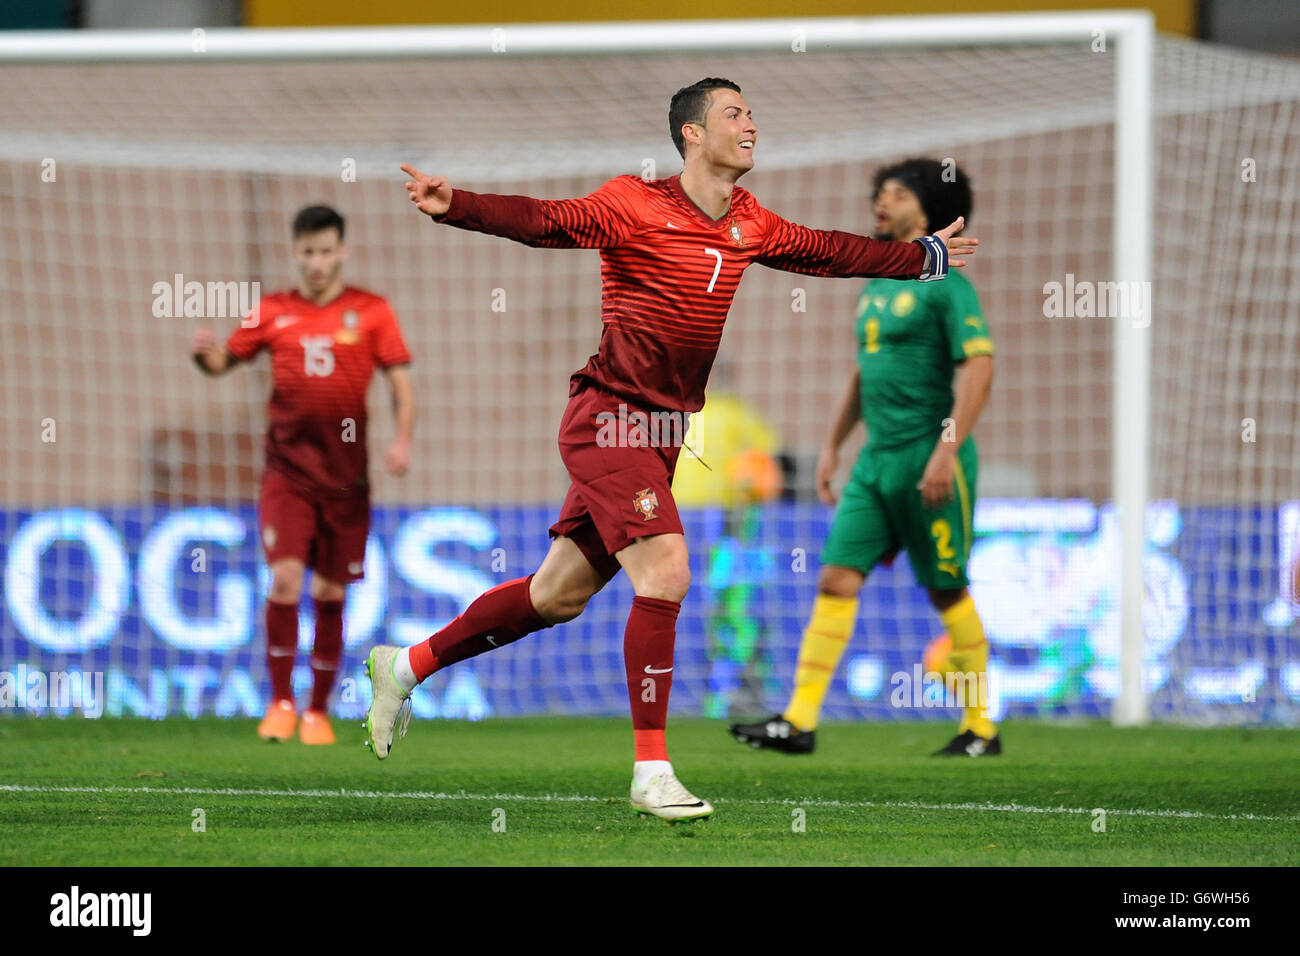 Portugal [2] - 0 Slovakia - Cristiano Ronaldo (penalty) 29‎'‎ : r